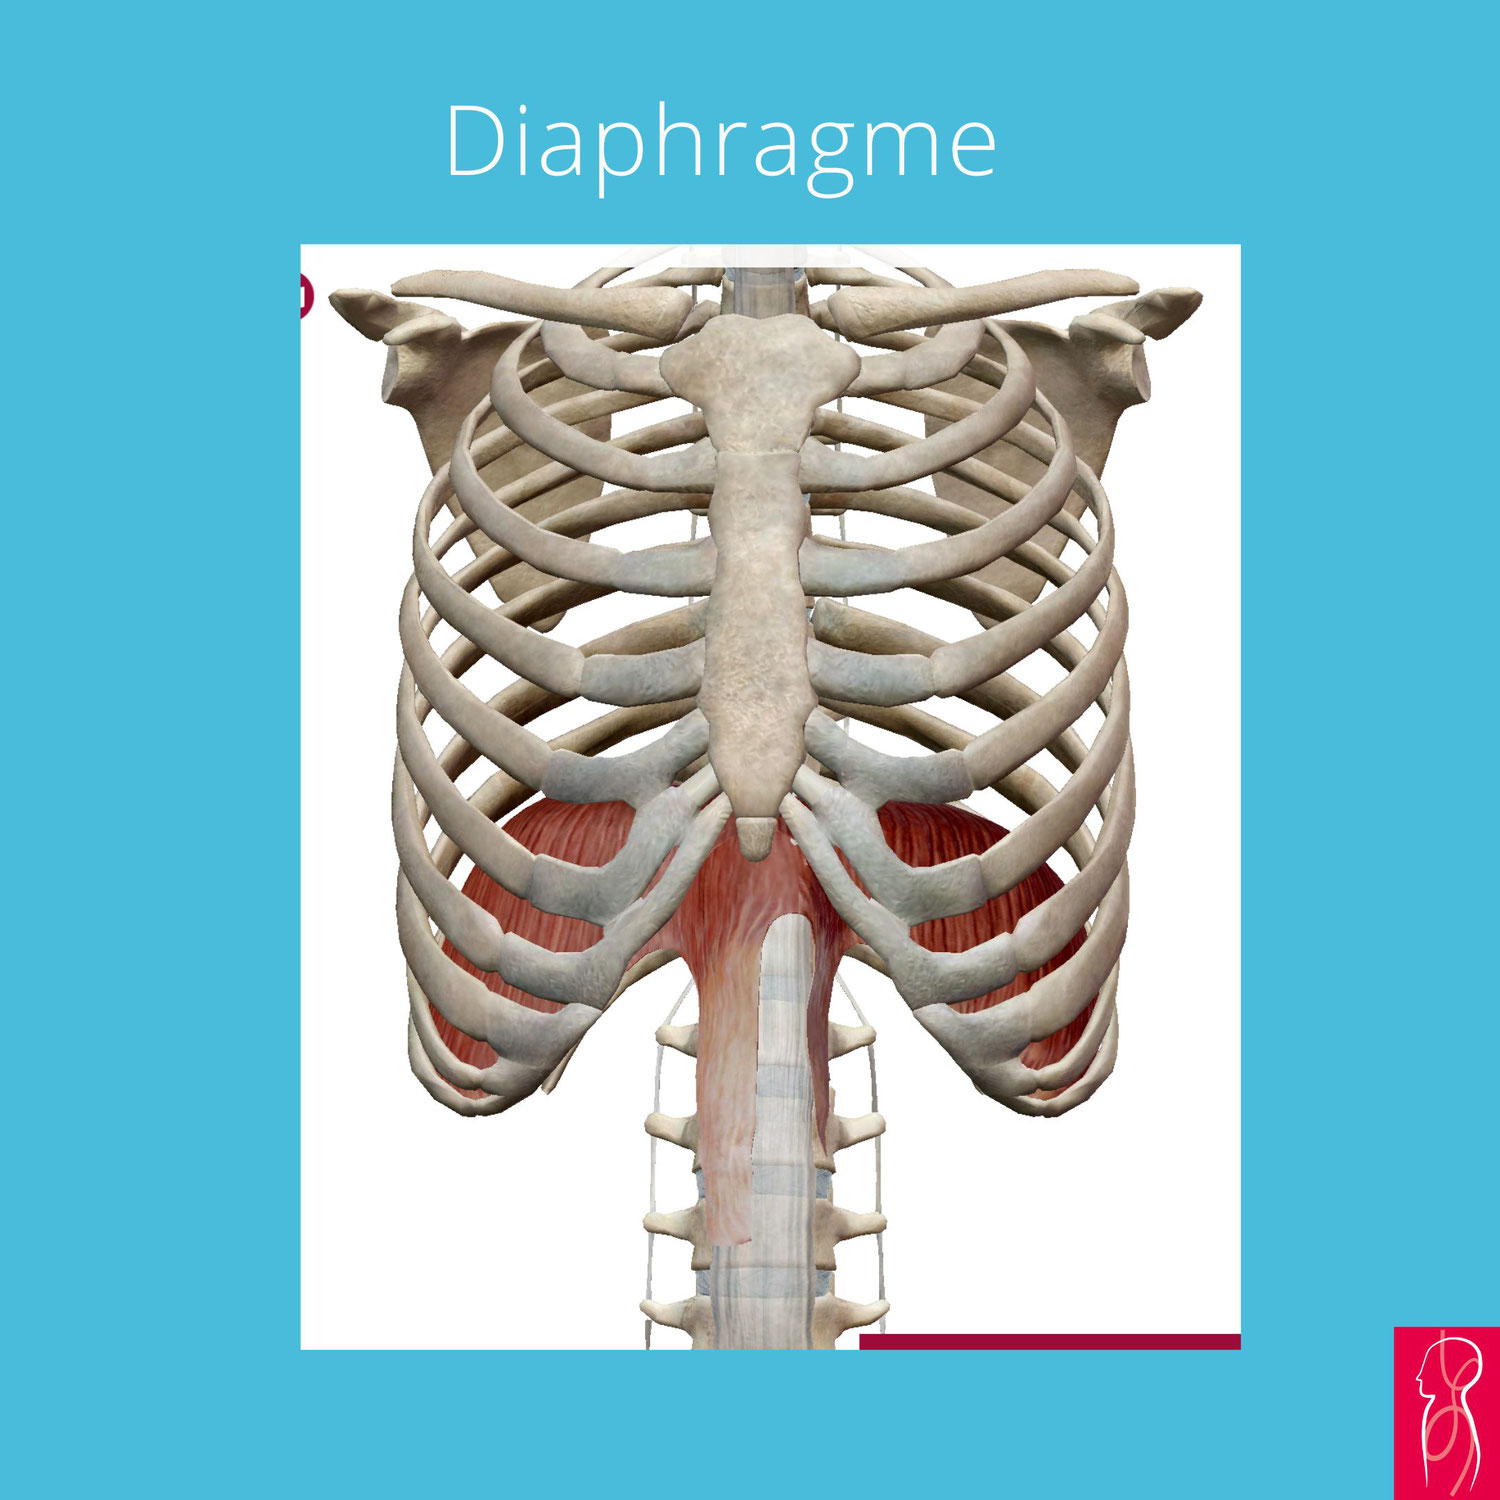 Le diaphragme